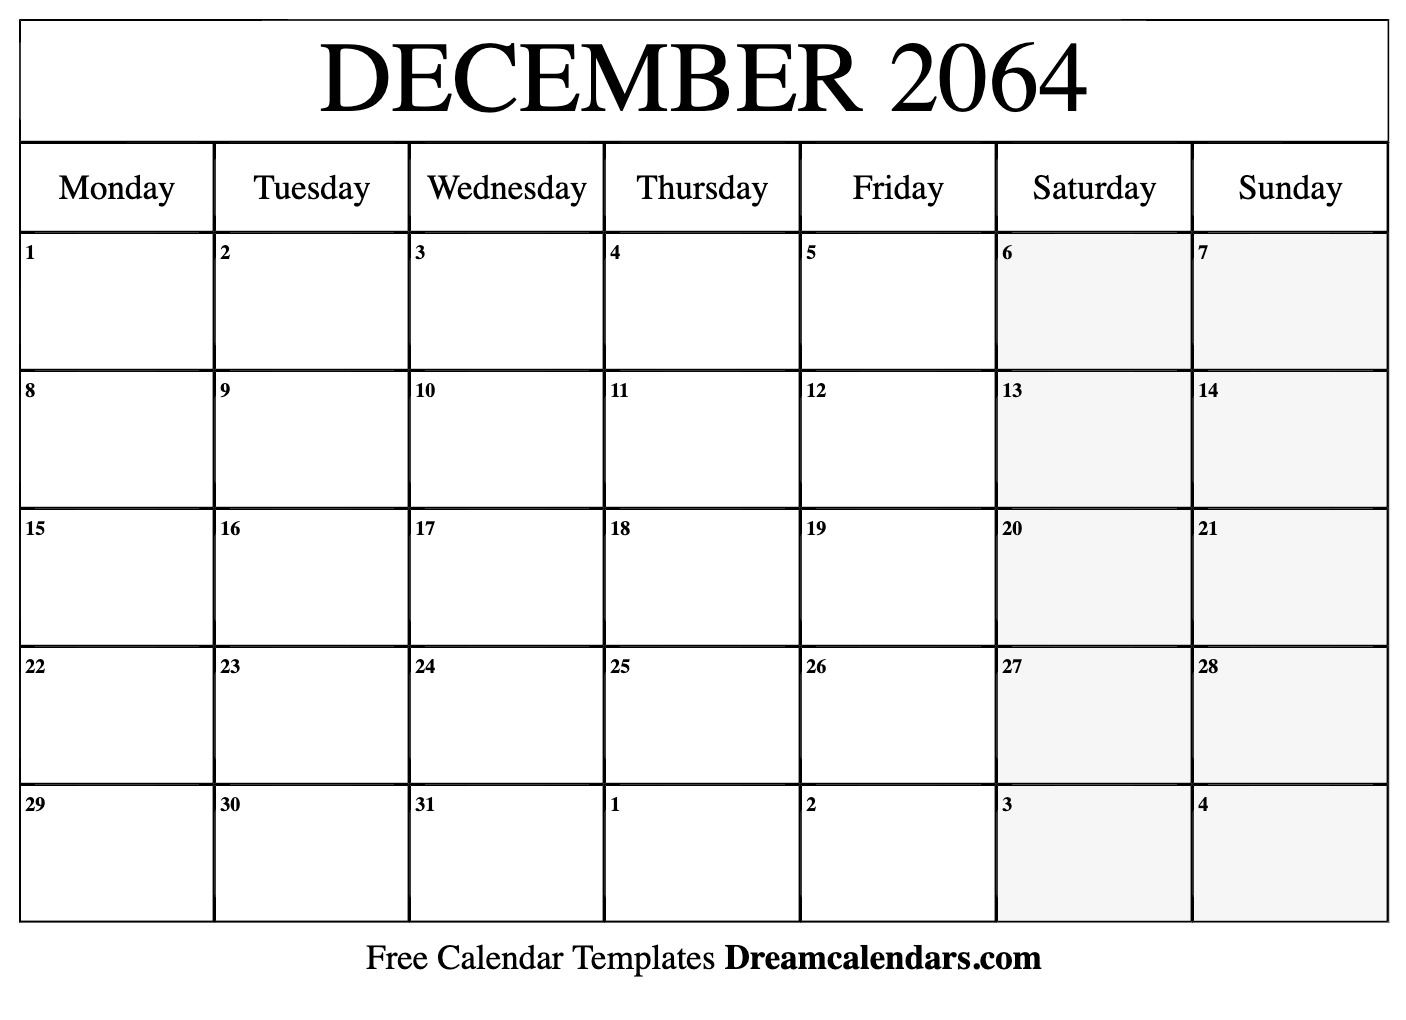 Free December 2064 Printable Calendar | Dream Calendars